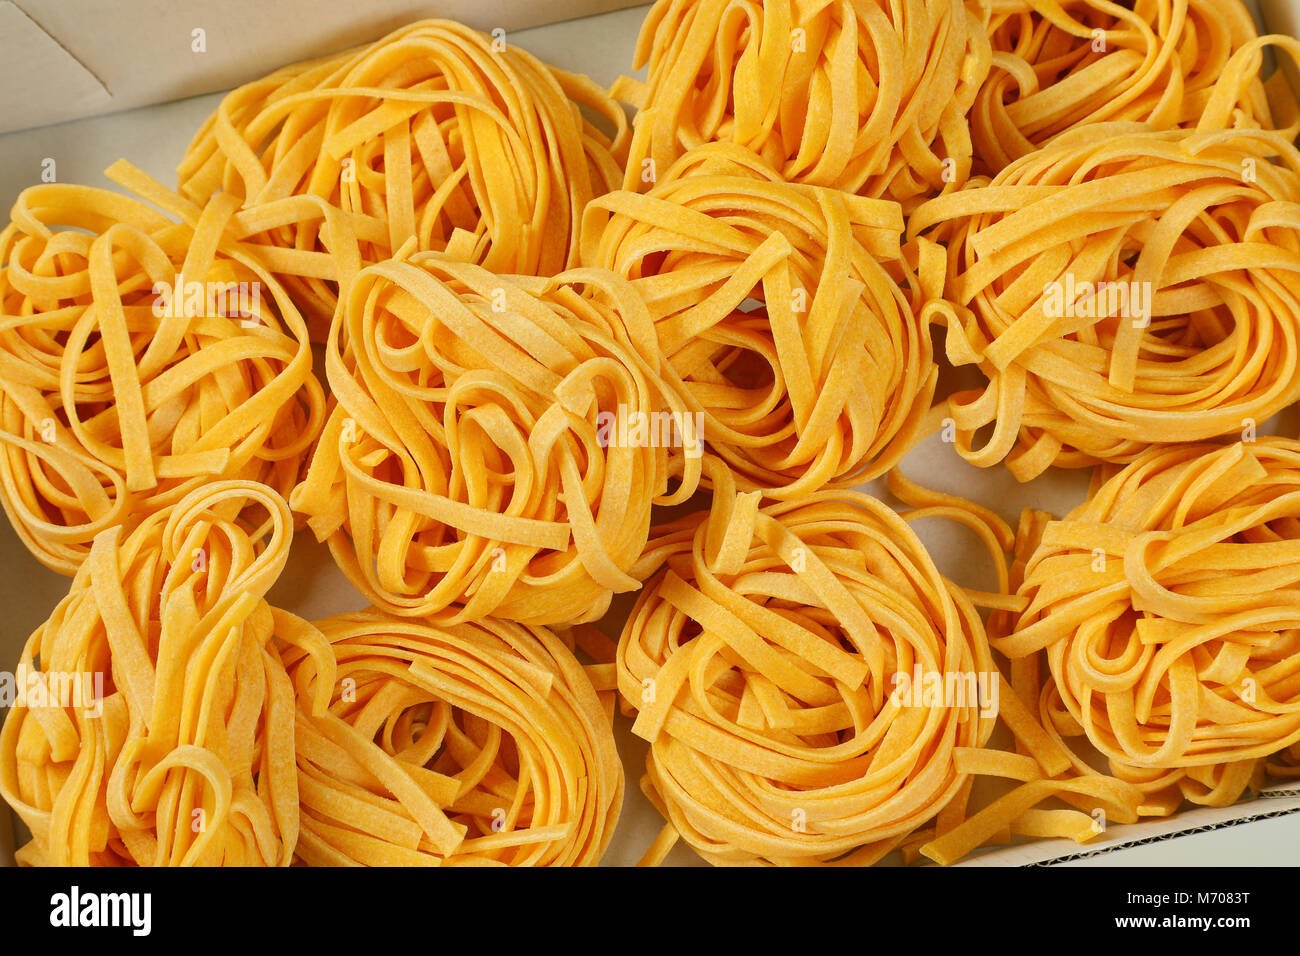 https://c8.alamy.com/comp/M7083T/box-of-dried-ribbon-pasta-bundles-close-up-M7083T.jpg